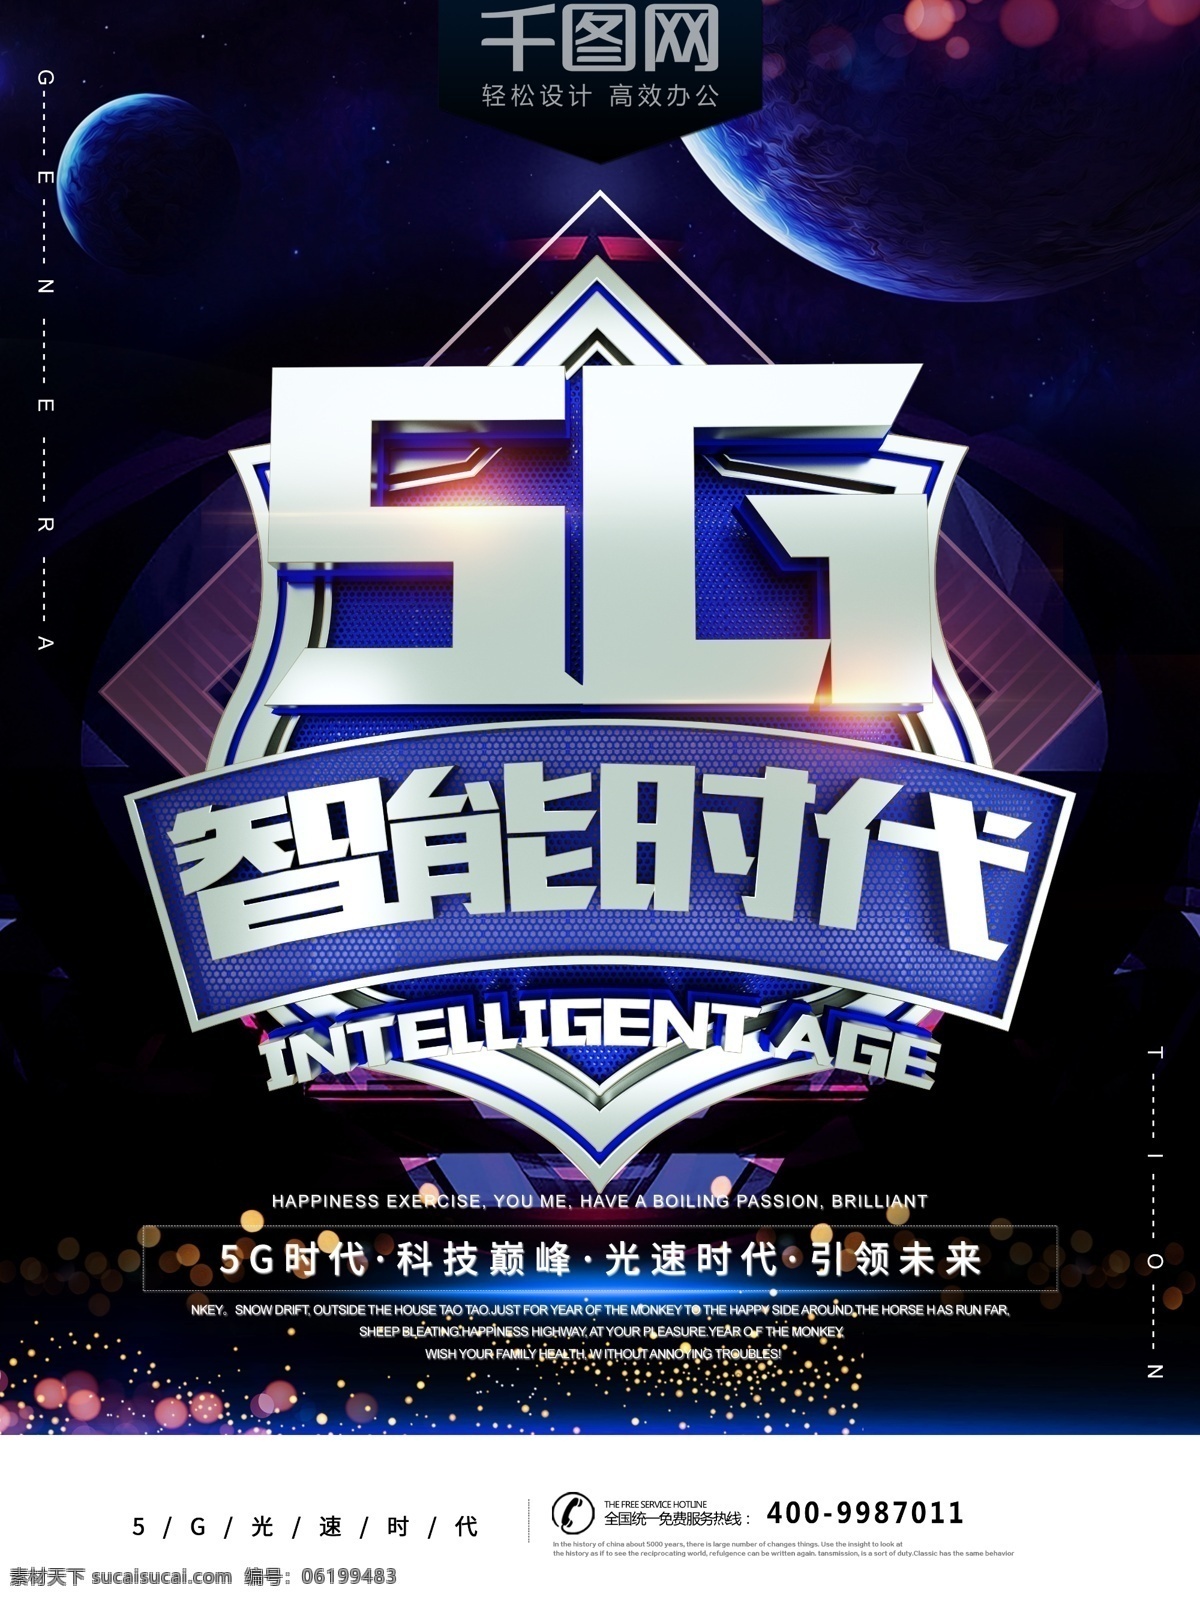 5g 智能 时代 光速 科技 商业 宣传海报 5g时代 5g光速时代 5g智能时代 只能